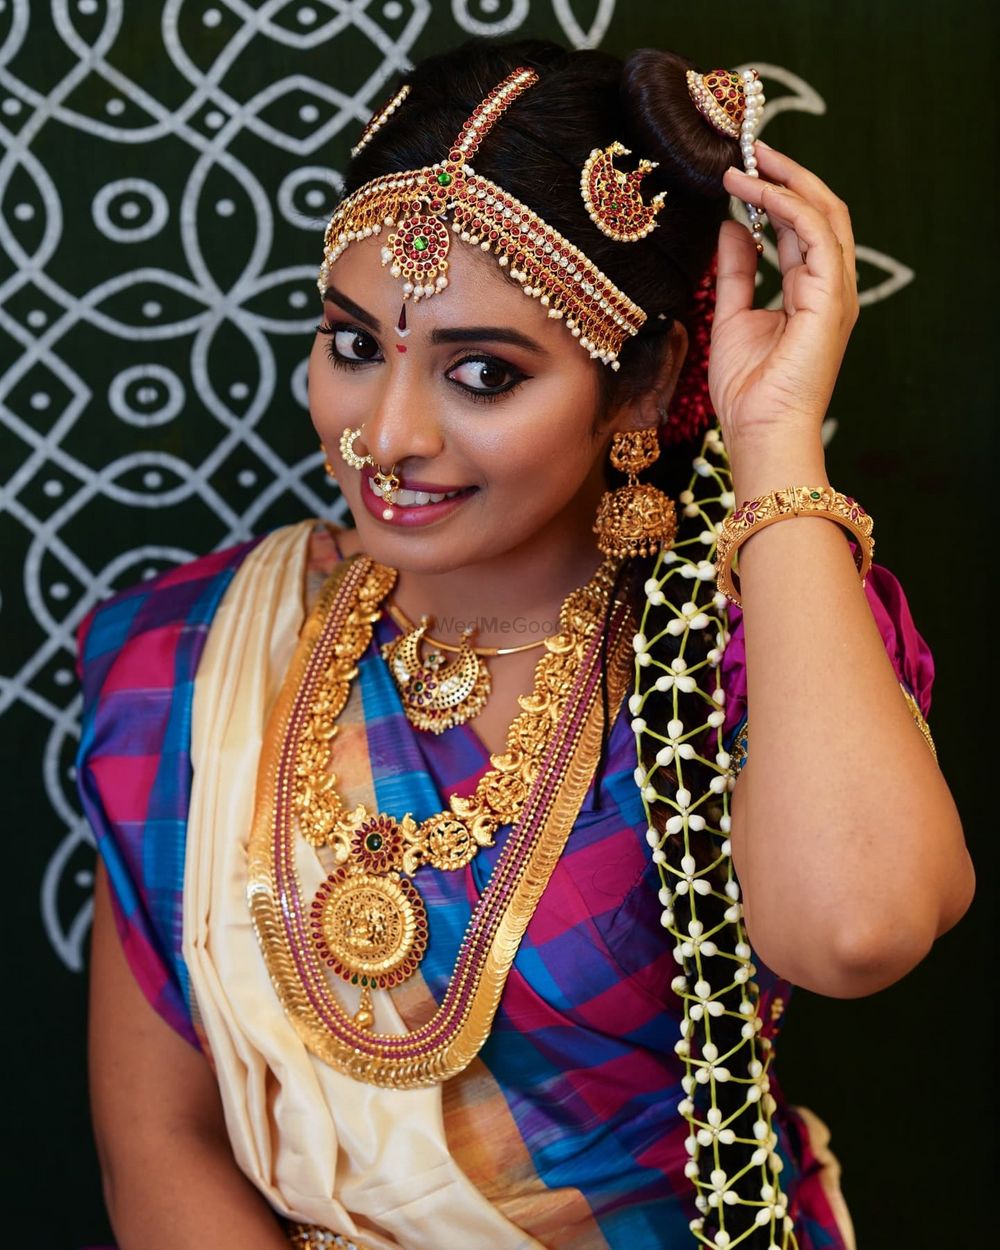 Photo From model makeovers - By Ramyashankar Makeup Artist